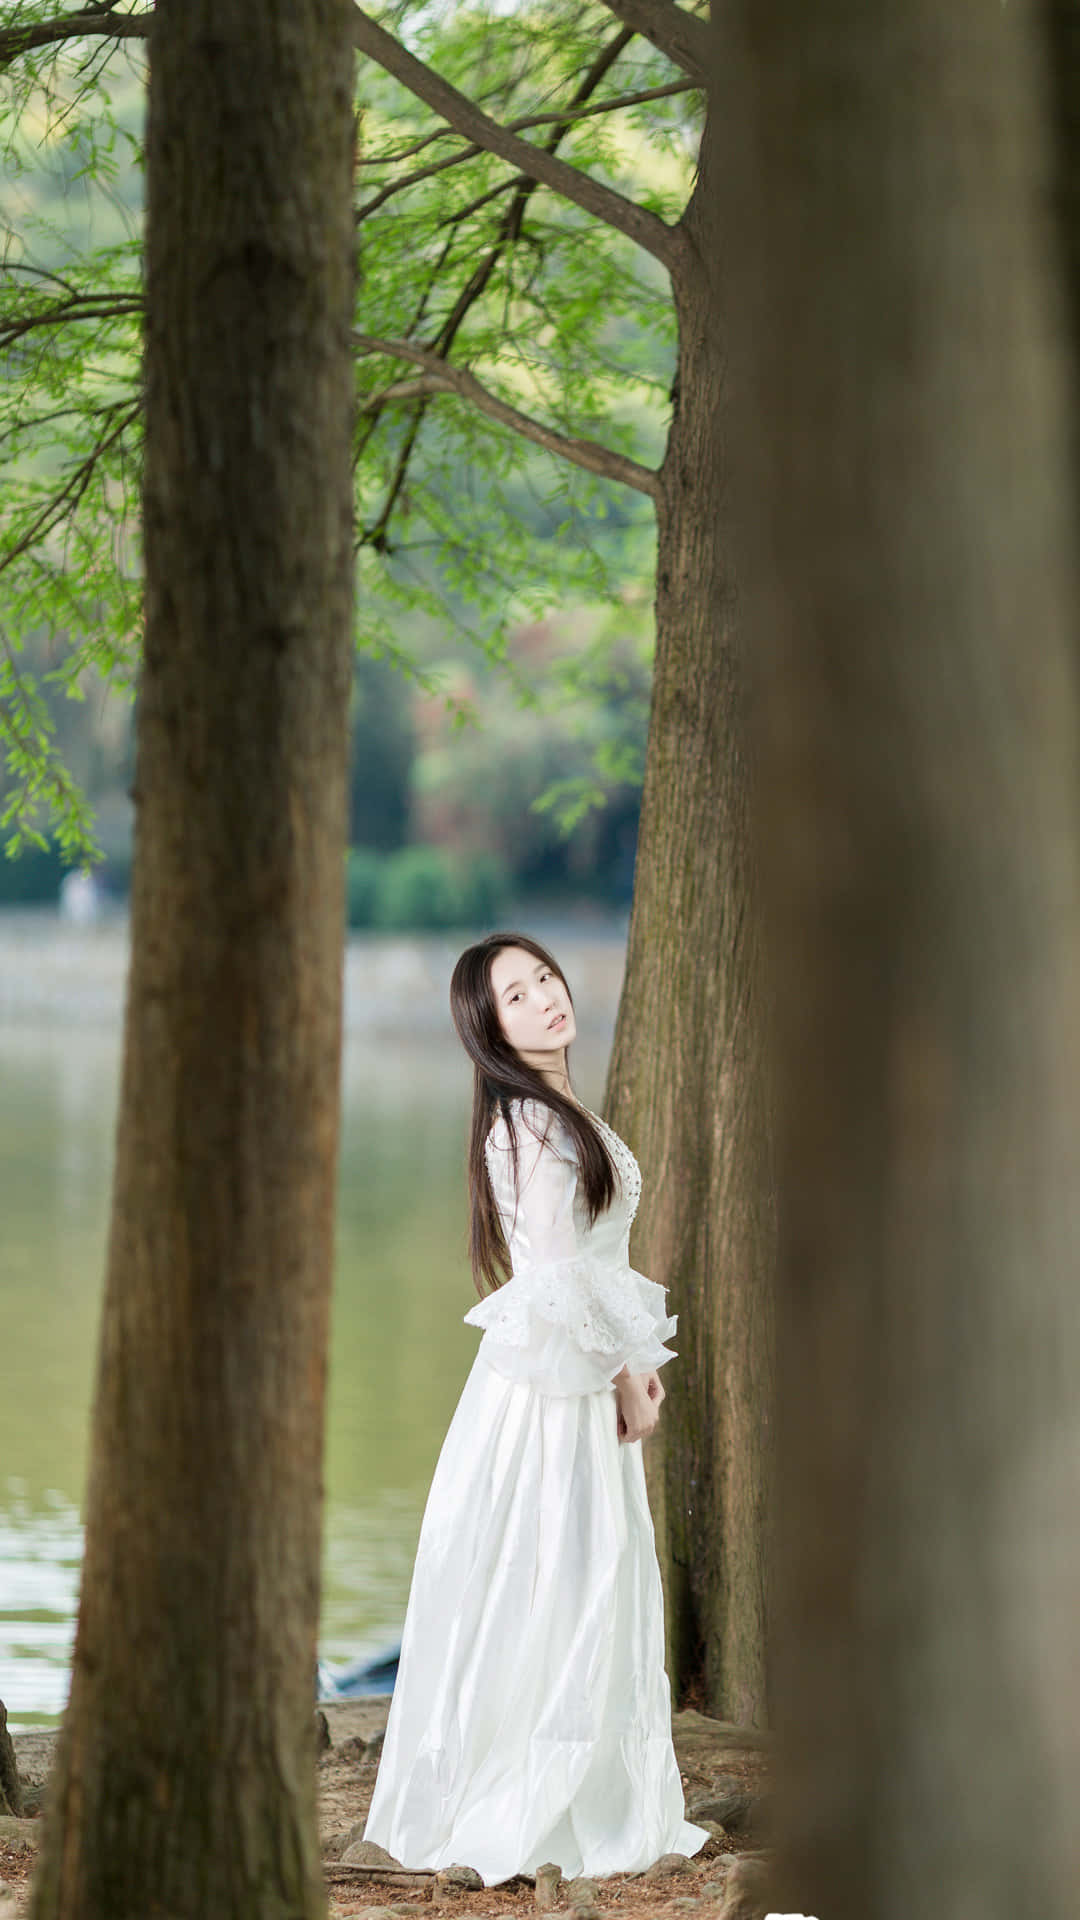 Caption: Mesmerizing Korean Beauty in a White Dress Wallpaper